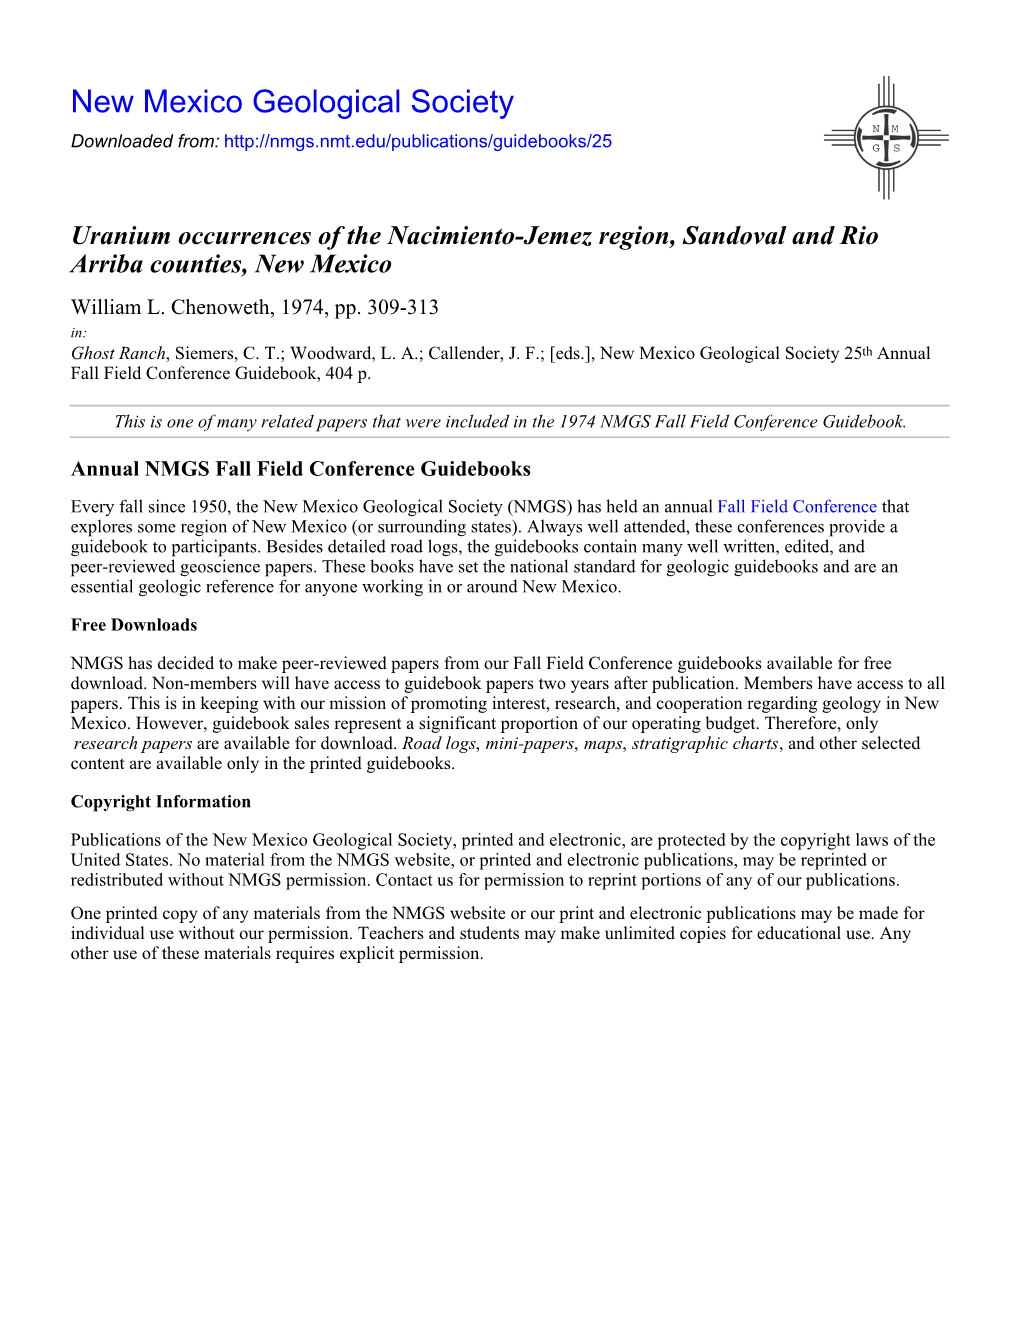 Uranium Occurrences of the Nacimiento-Jemez Region, Sandoval and Rio Arriba Counties, New Mexico William L